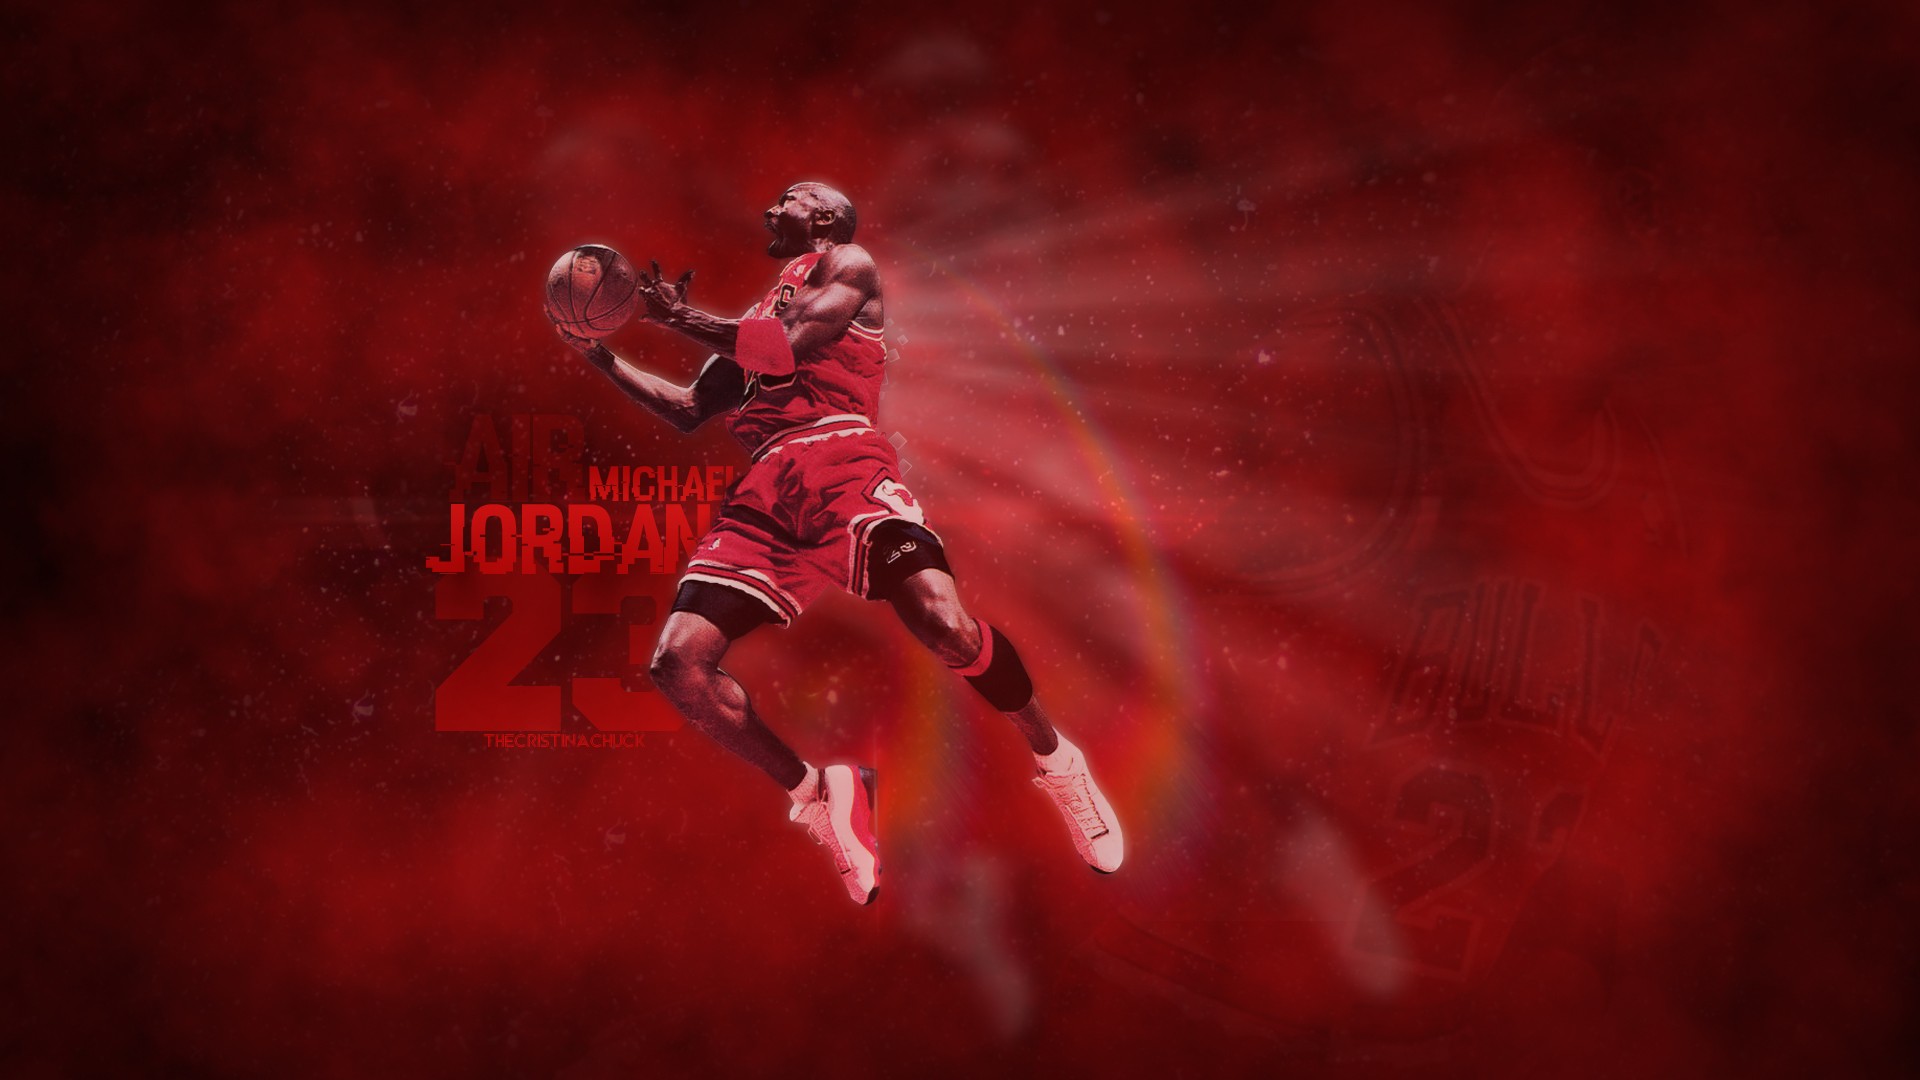 michael jordan wallpaper,red,football player,player,american football,graphics